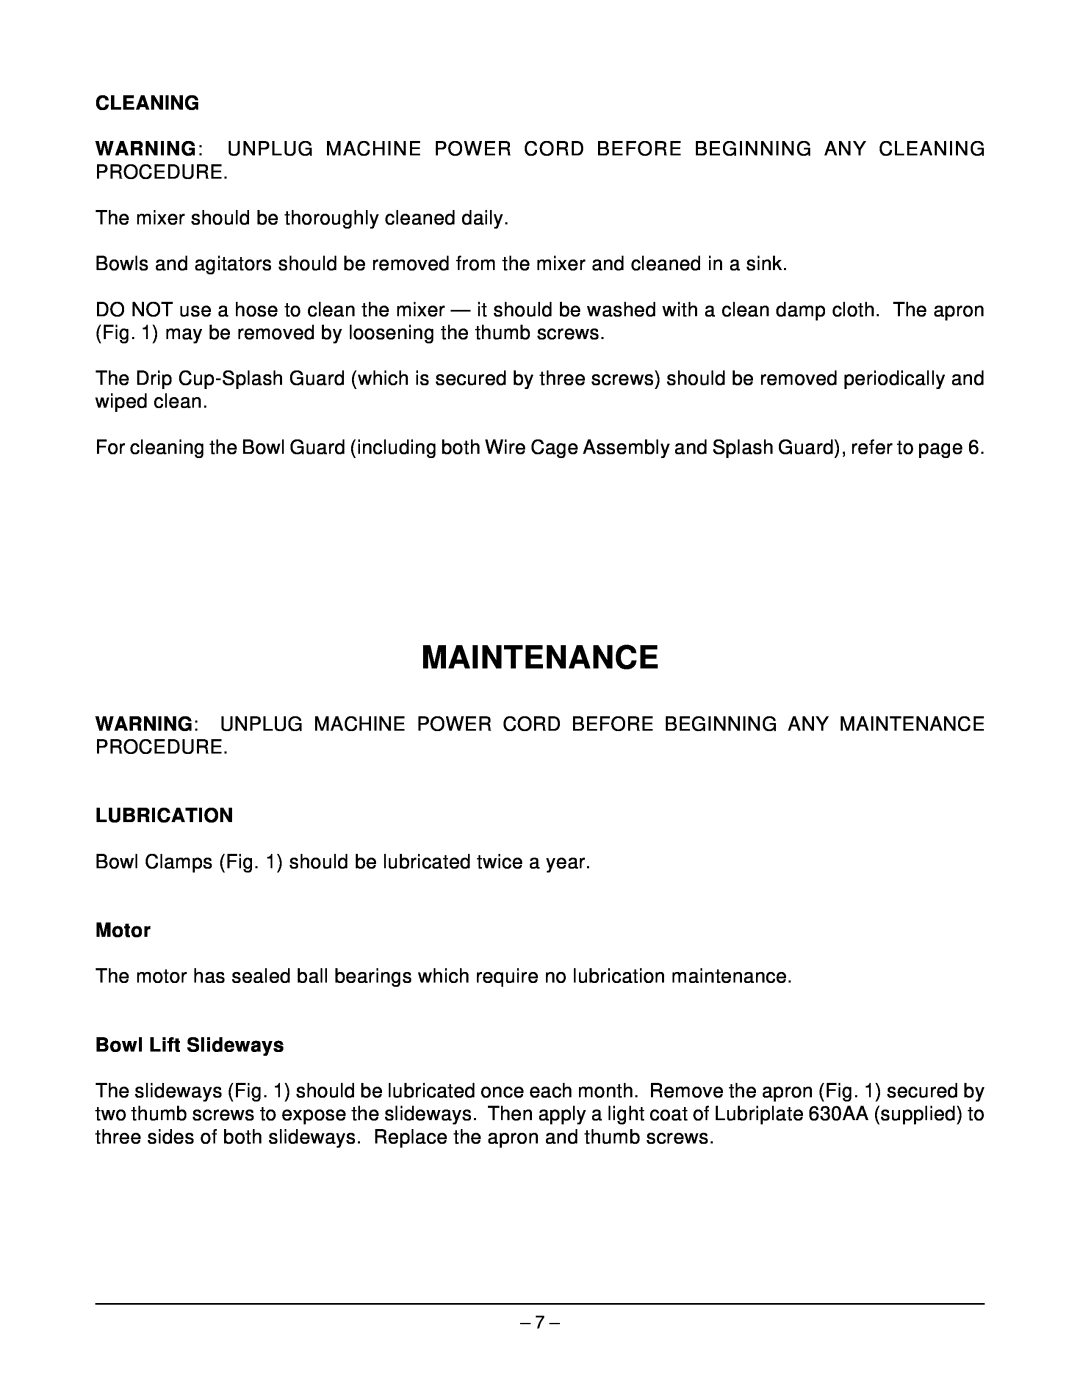 Hobart ML-104858 manual Maintenance, Cleaning, Lubrication, Motor, Bowl Lift Slideways 